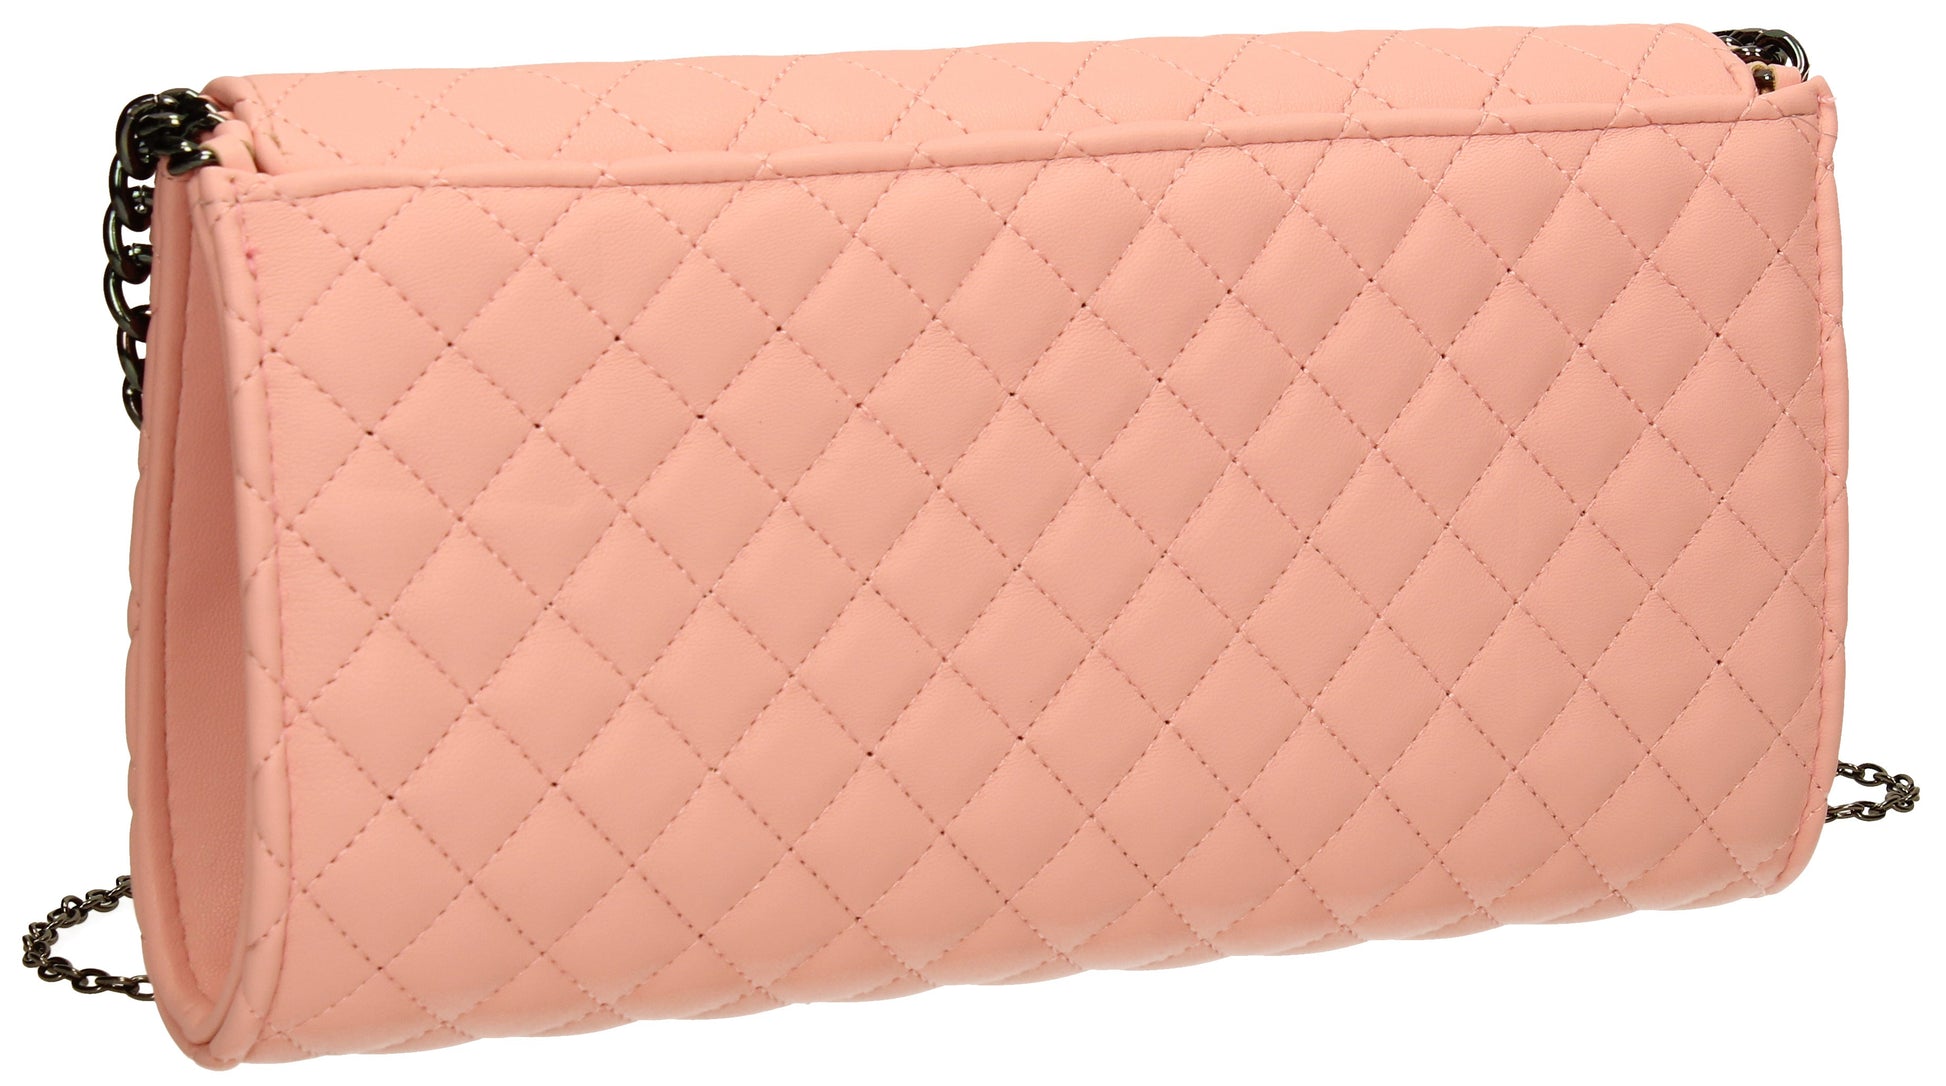 SWANKYSWANS Simon Clutch Bag Pink Cute Cheap Clutch Bag For Weddings School and Work